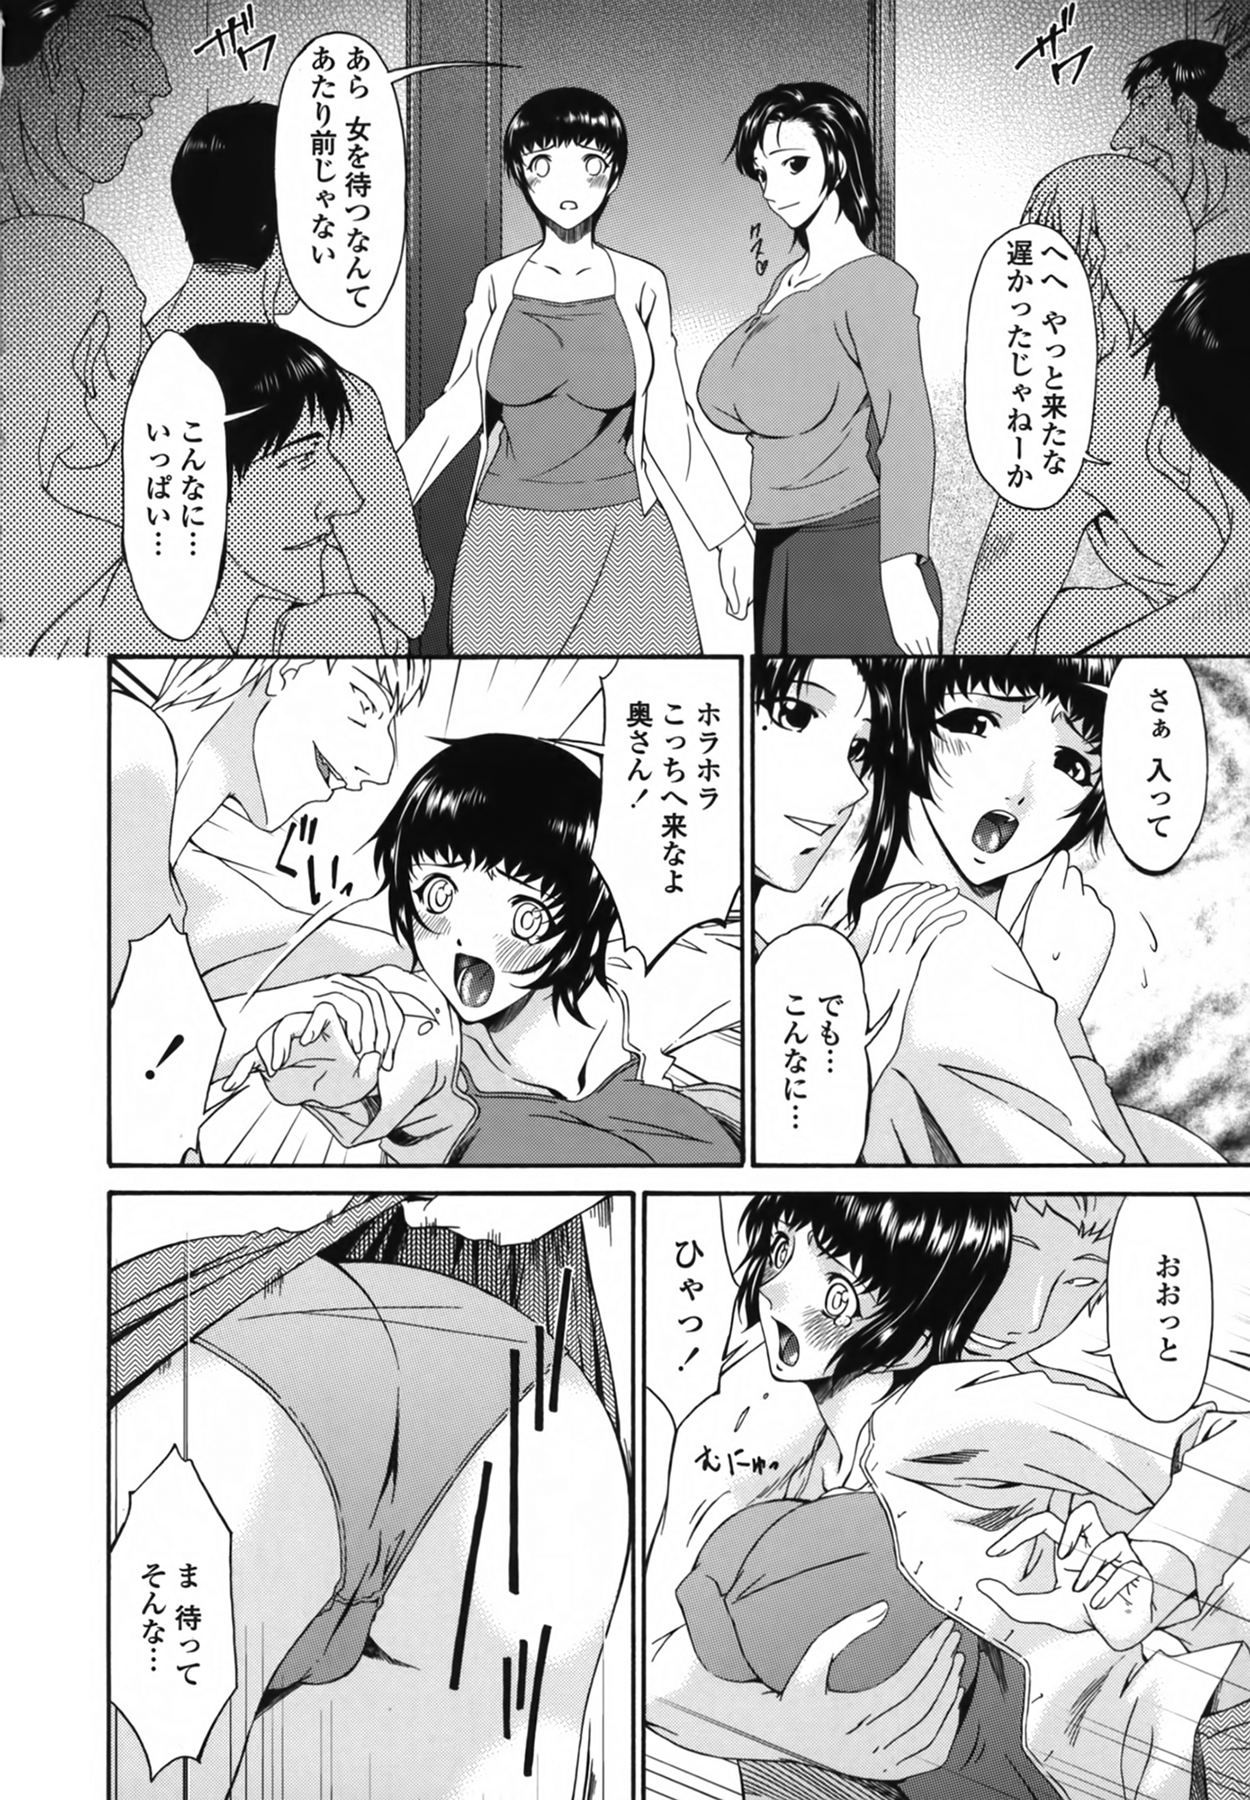 Read Bai Asuka Ochitsuma Slave Wife Hentai Porns Manga And